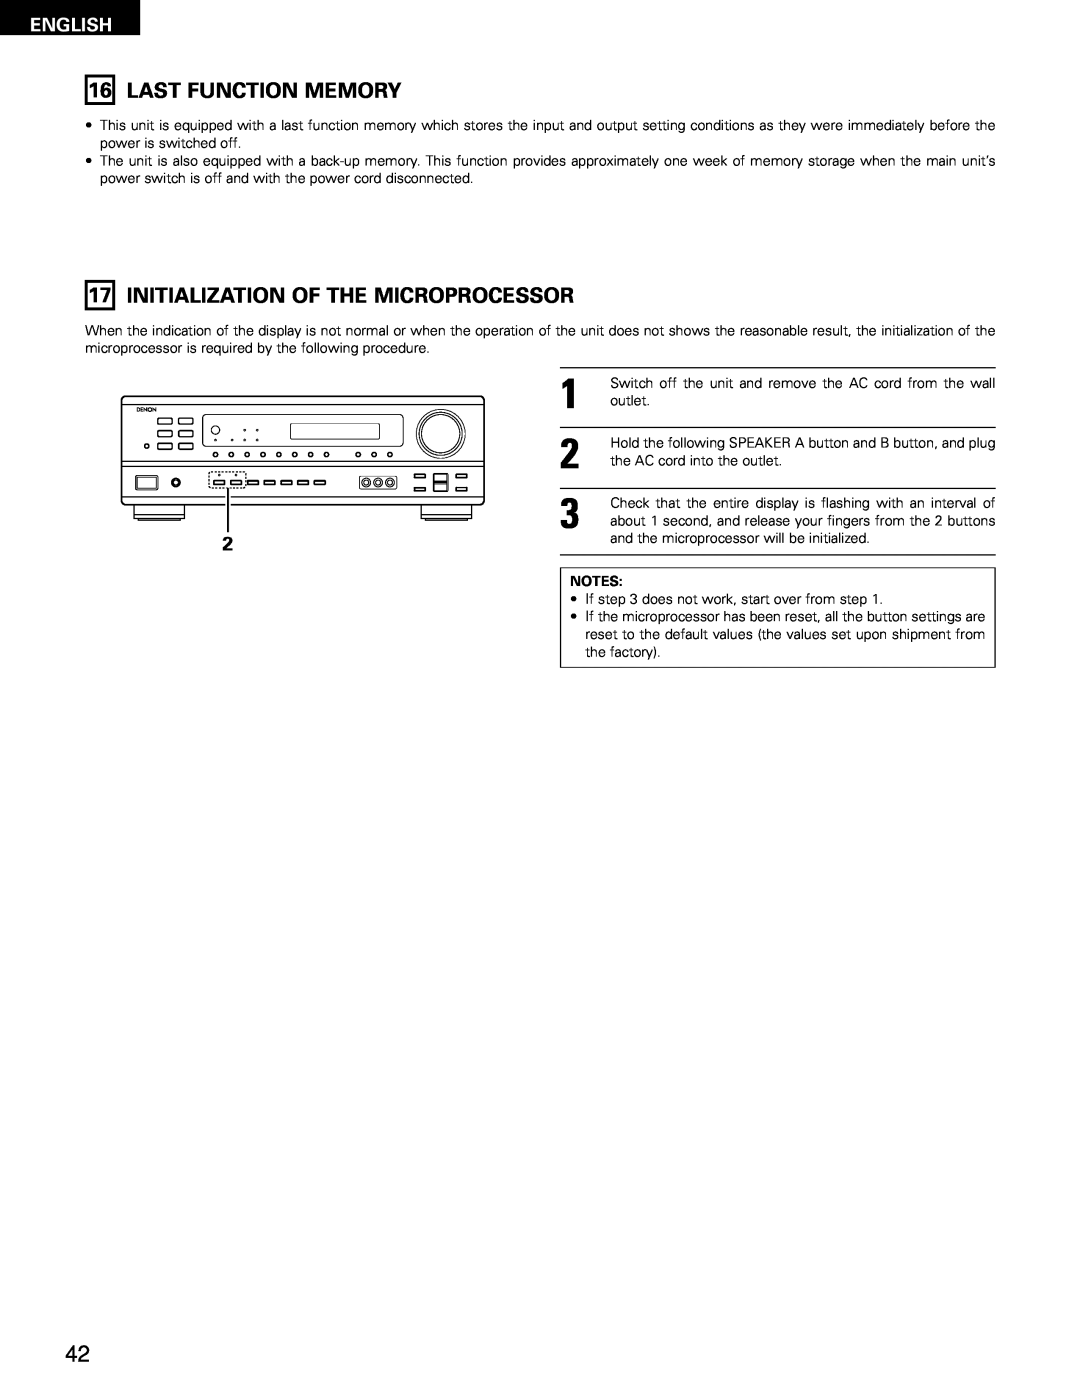 Denon 483, AVR-1403 manual Last Function Memory, Initialization Of The Microprocessor, English 